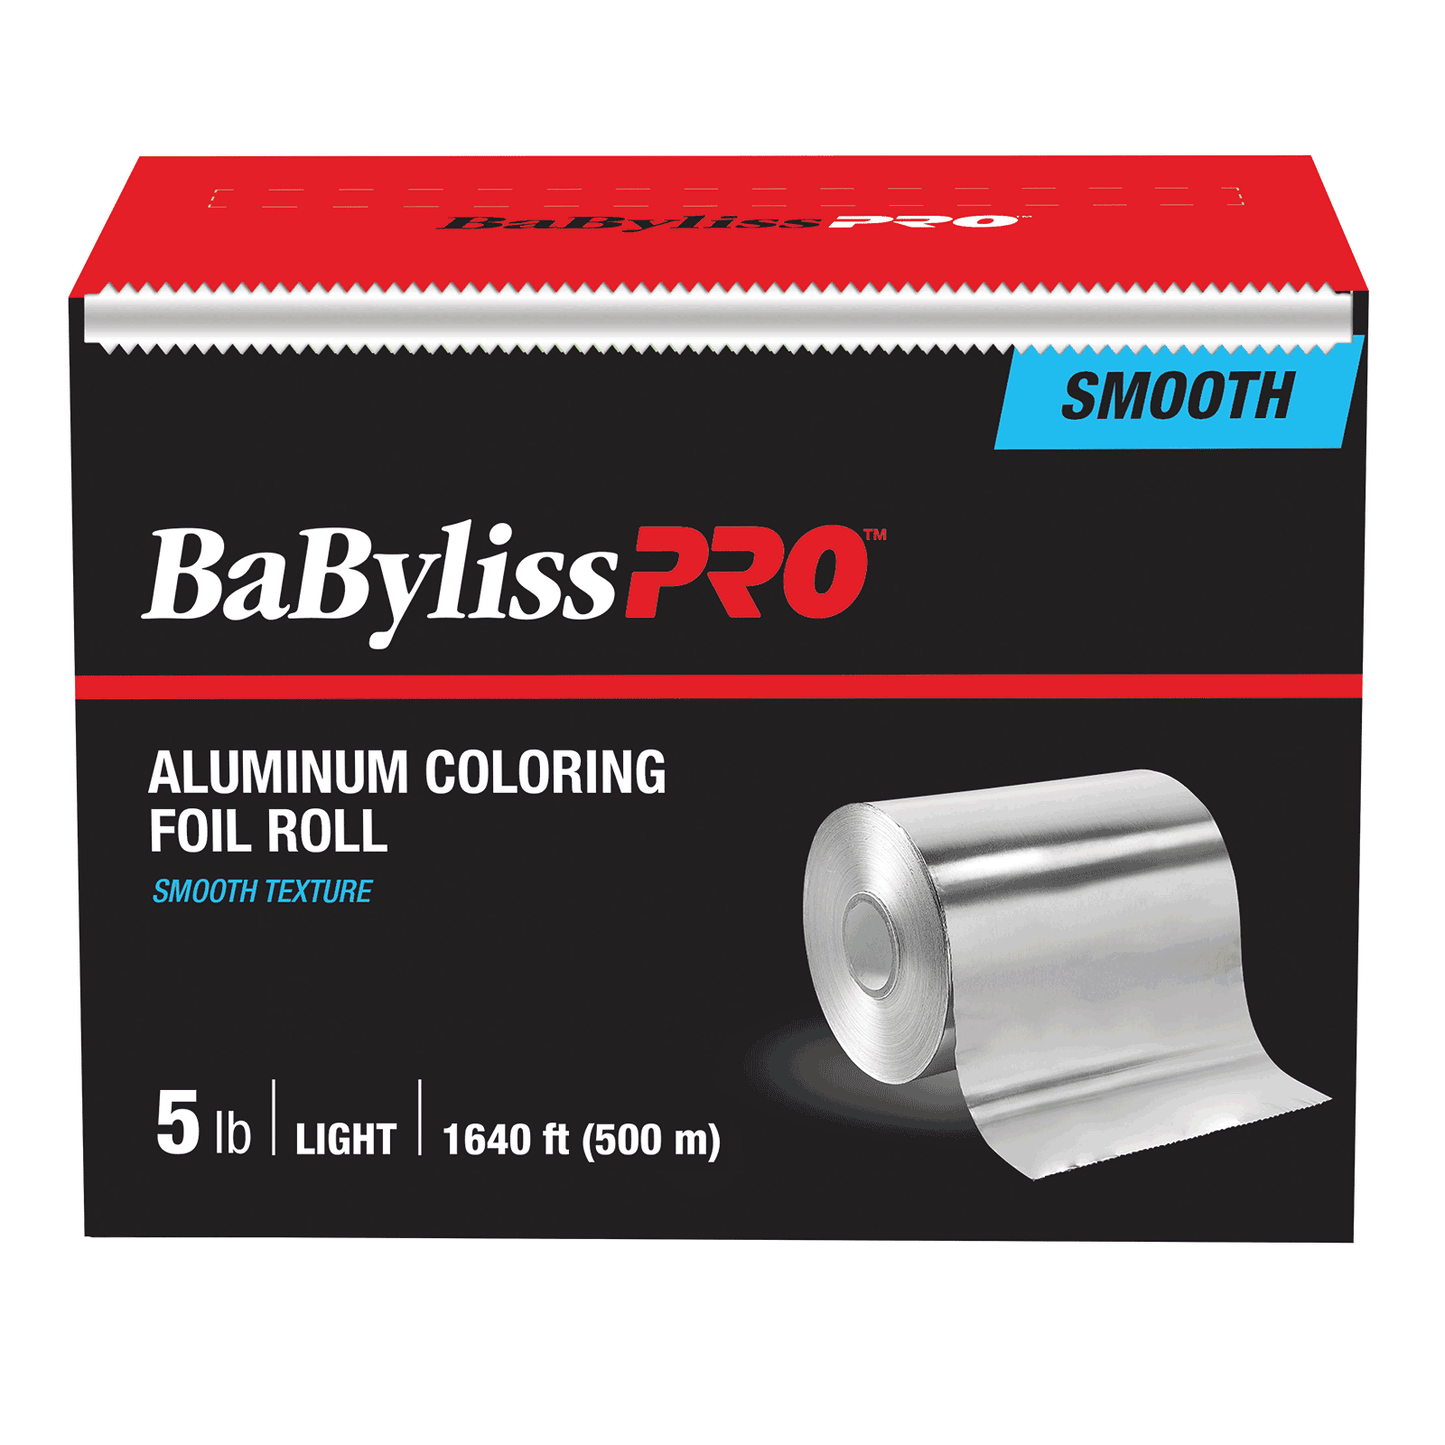 Babyliss Foil 5LB Roll